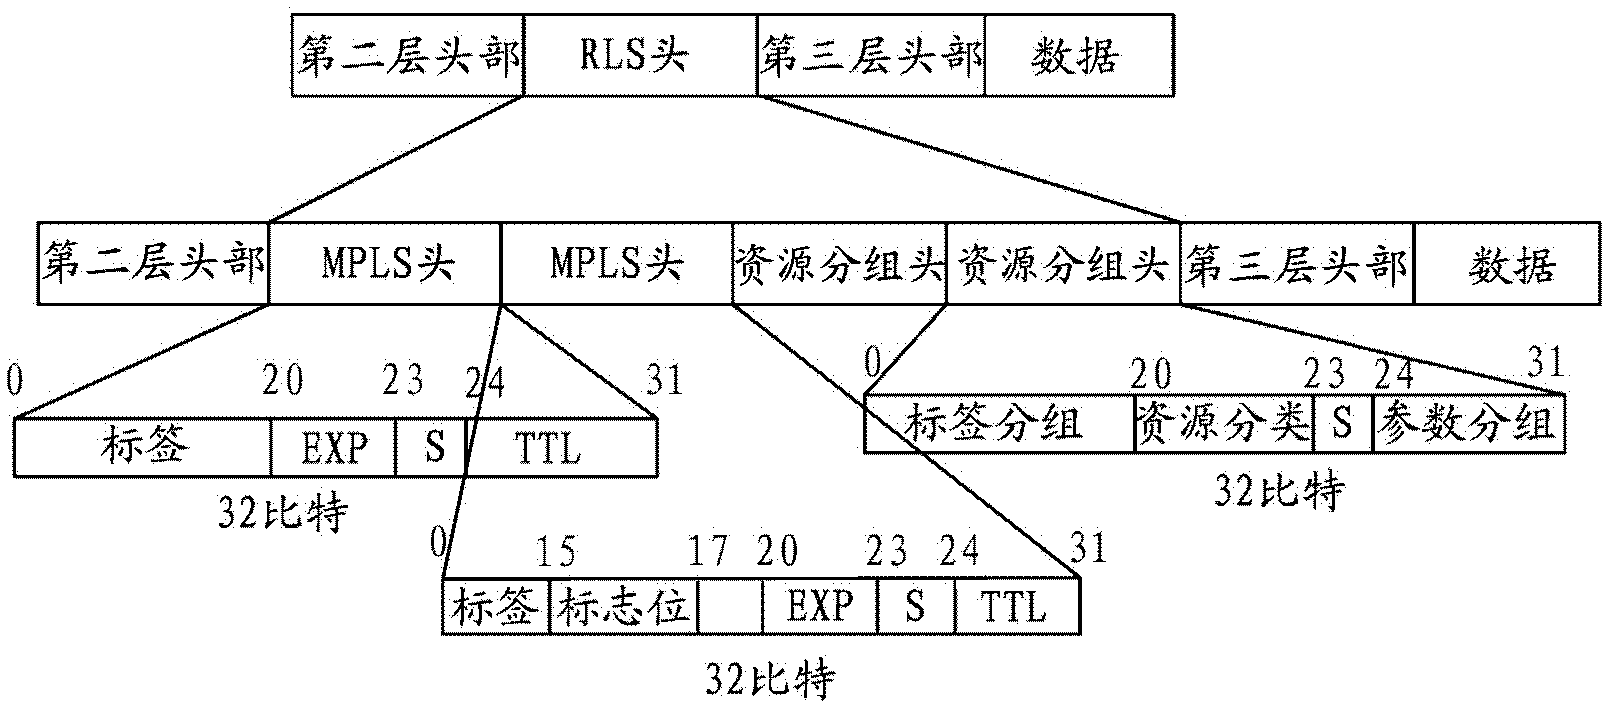 Wireless network system resource label switch method